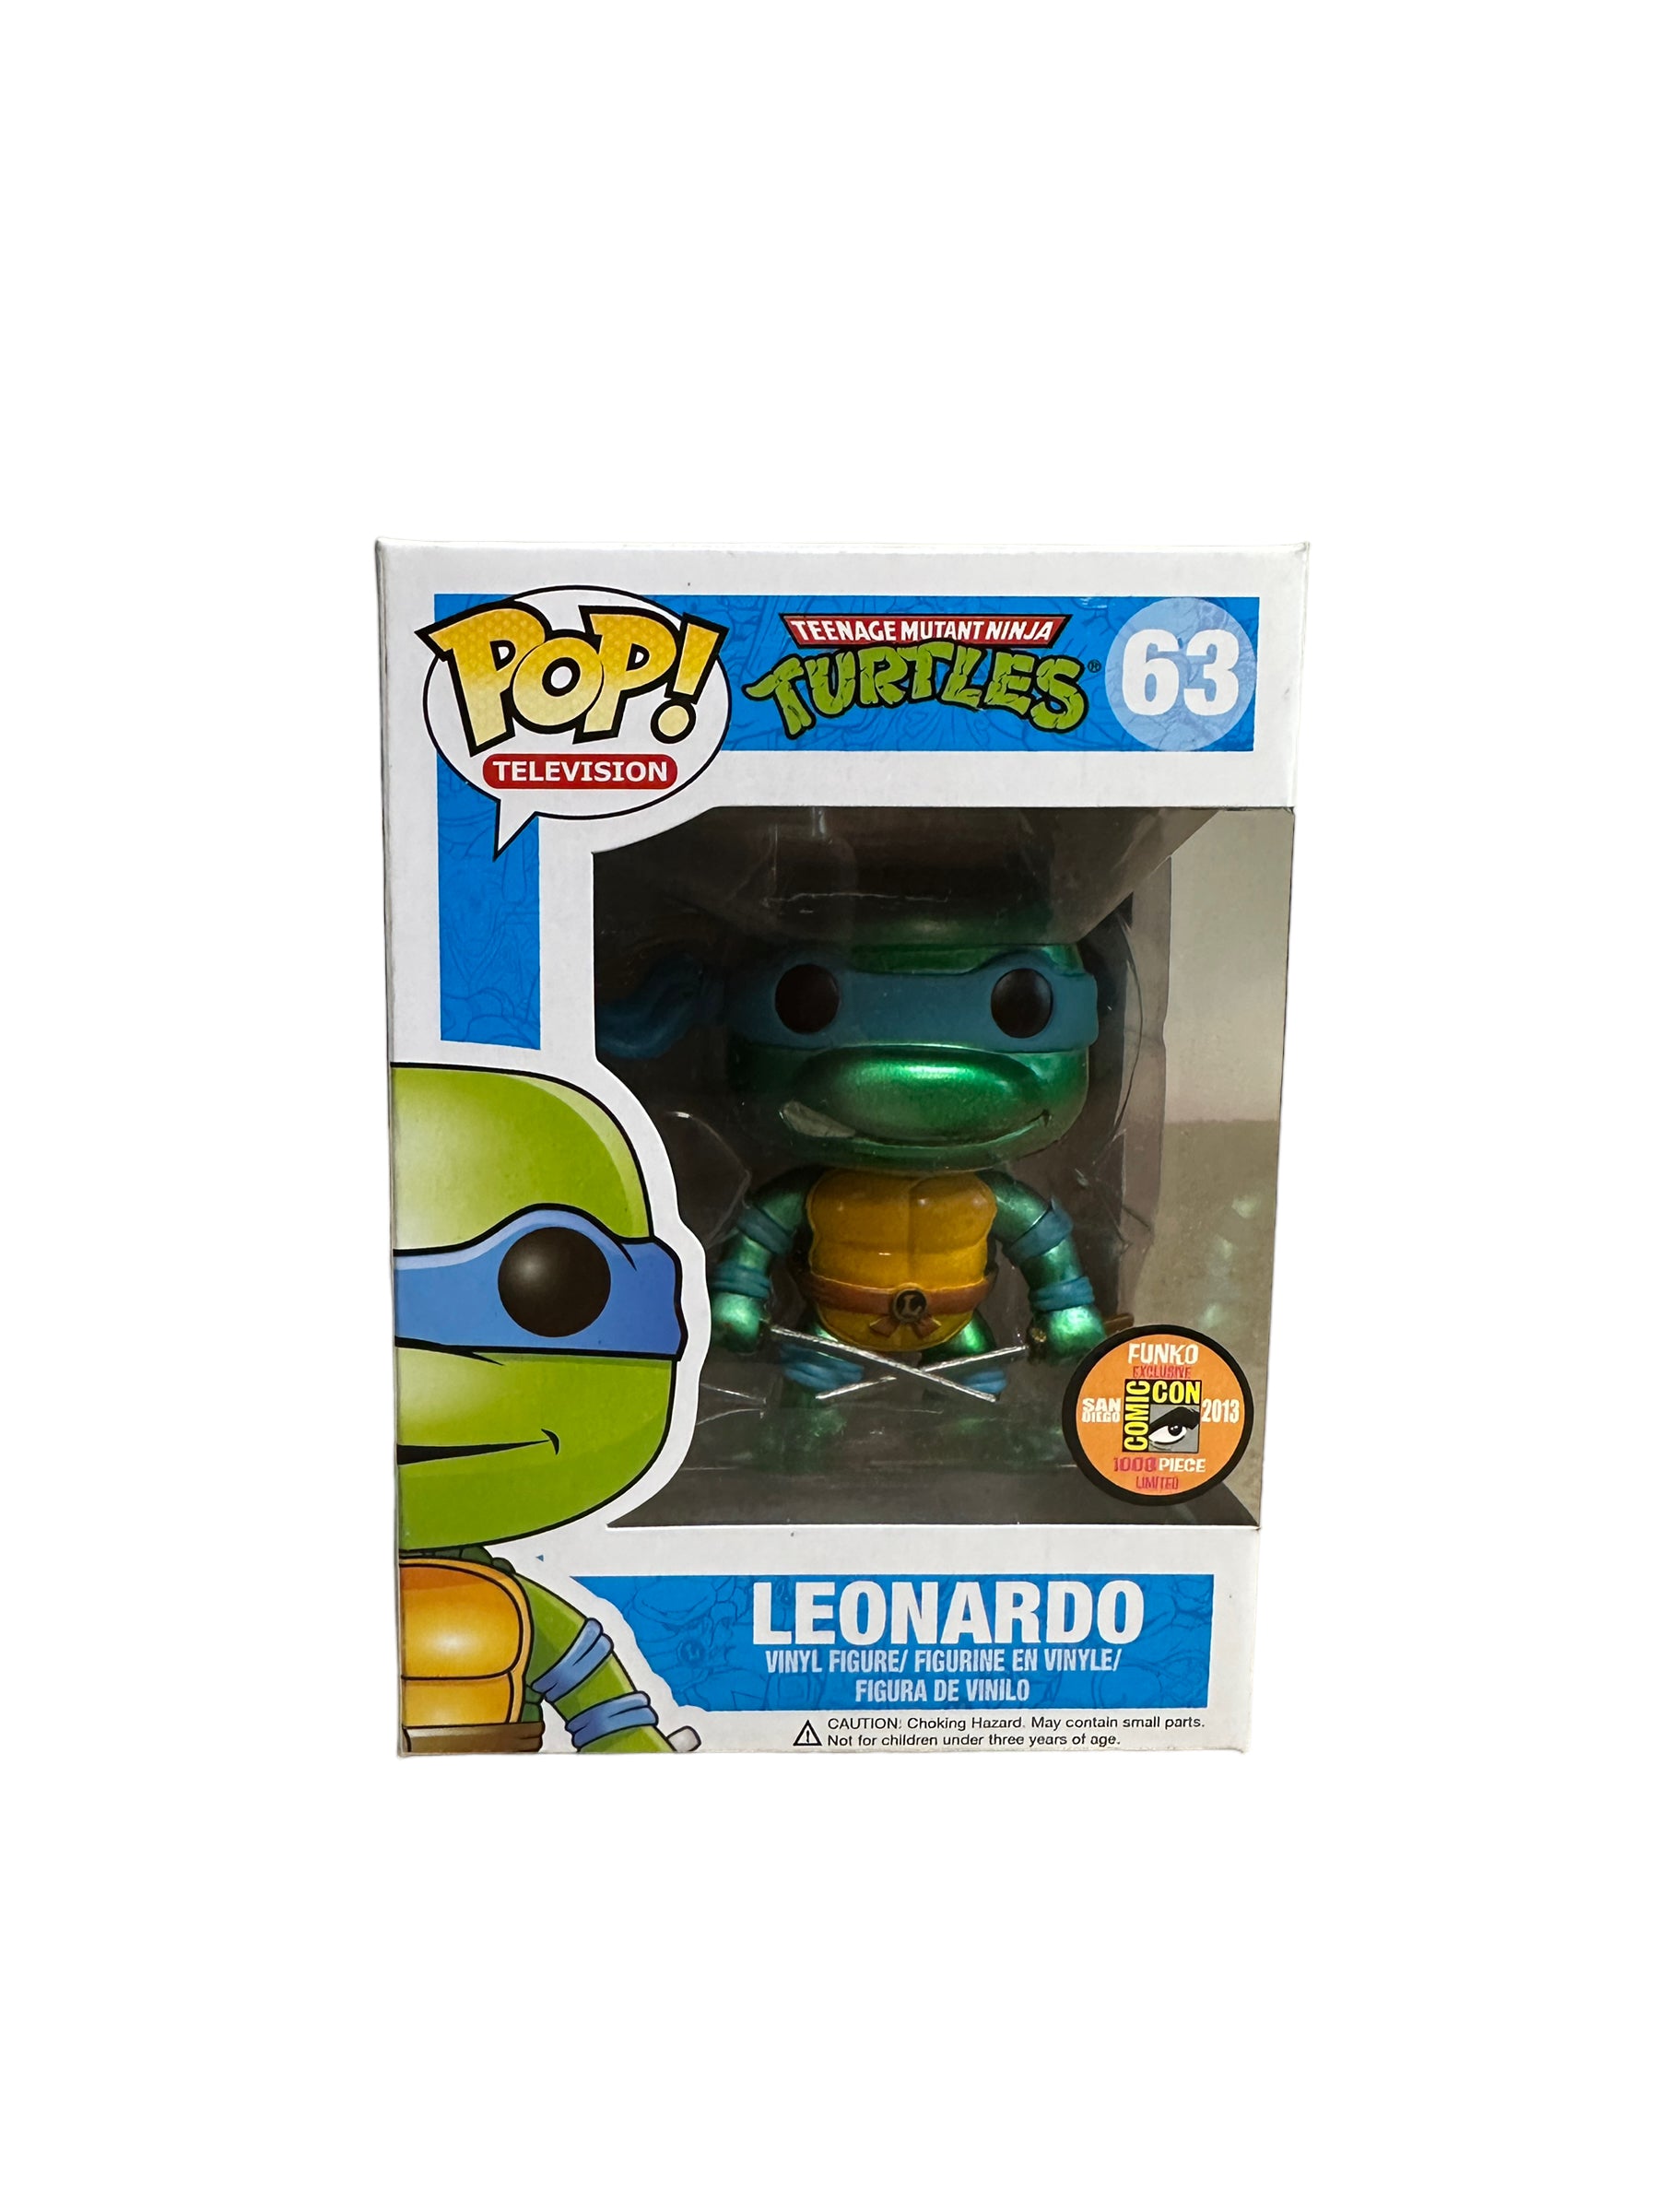 Leonardo #63 (Metallic) Funko Pop! - Teenage Mutant Ninja Turtles - SDCC 2013 Exclusive LE1008 Pcs - Condition 9/10